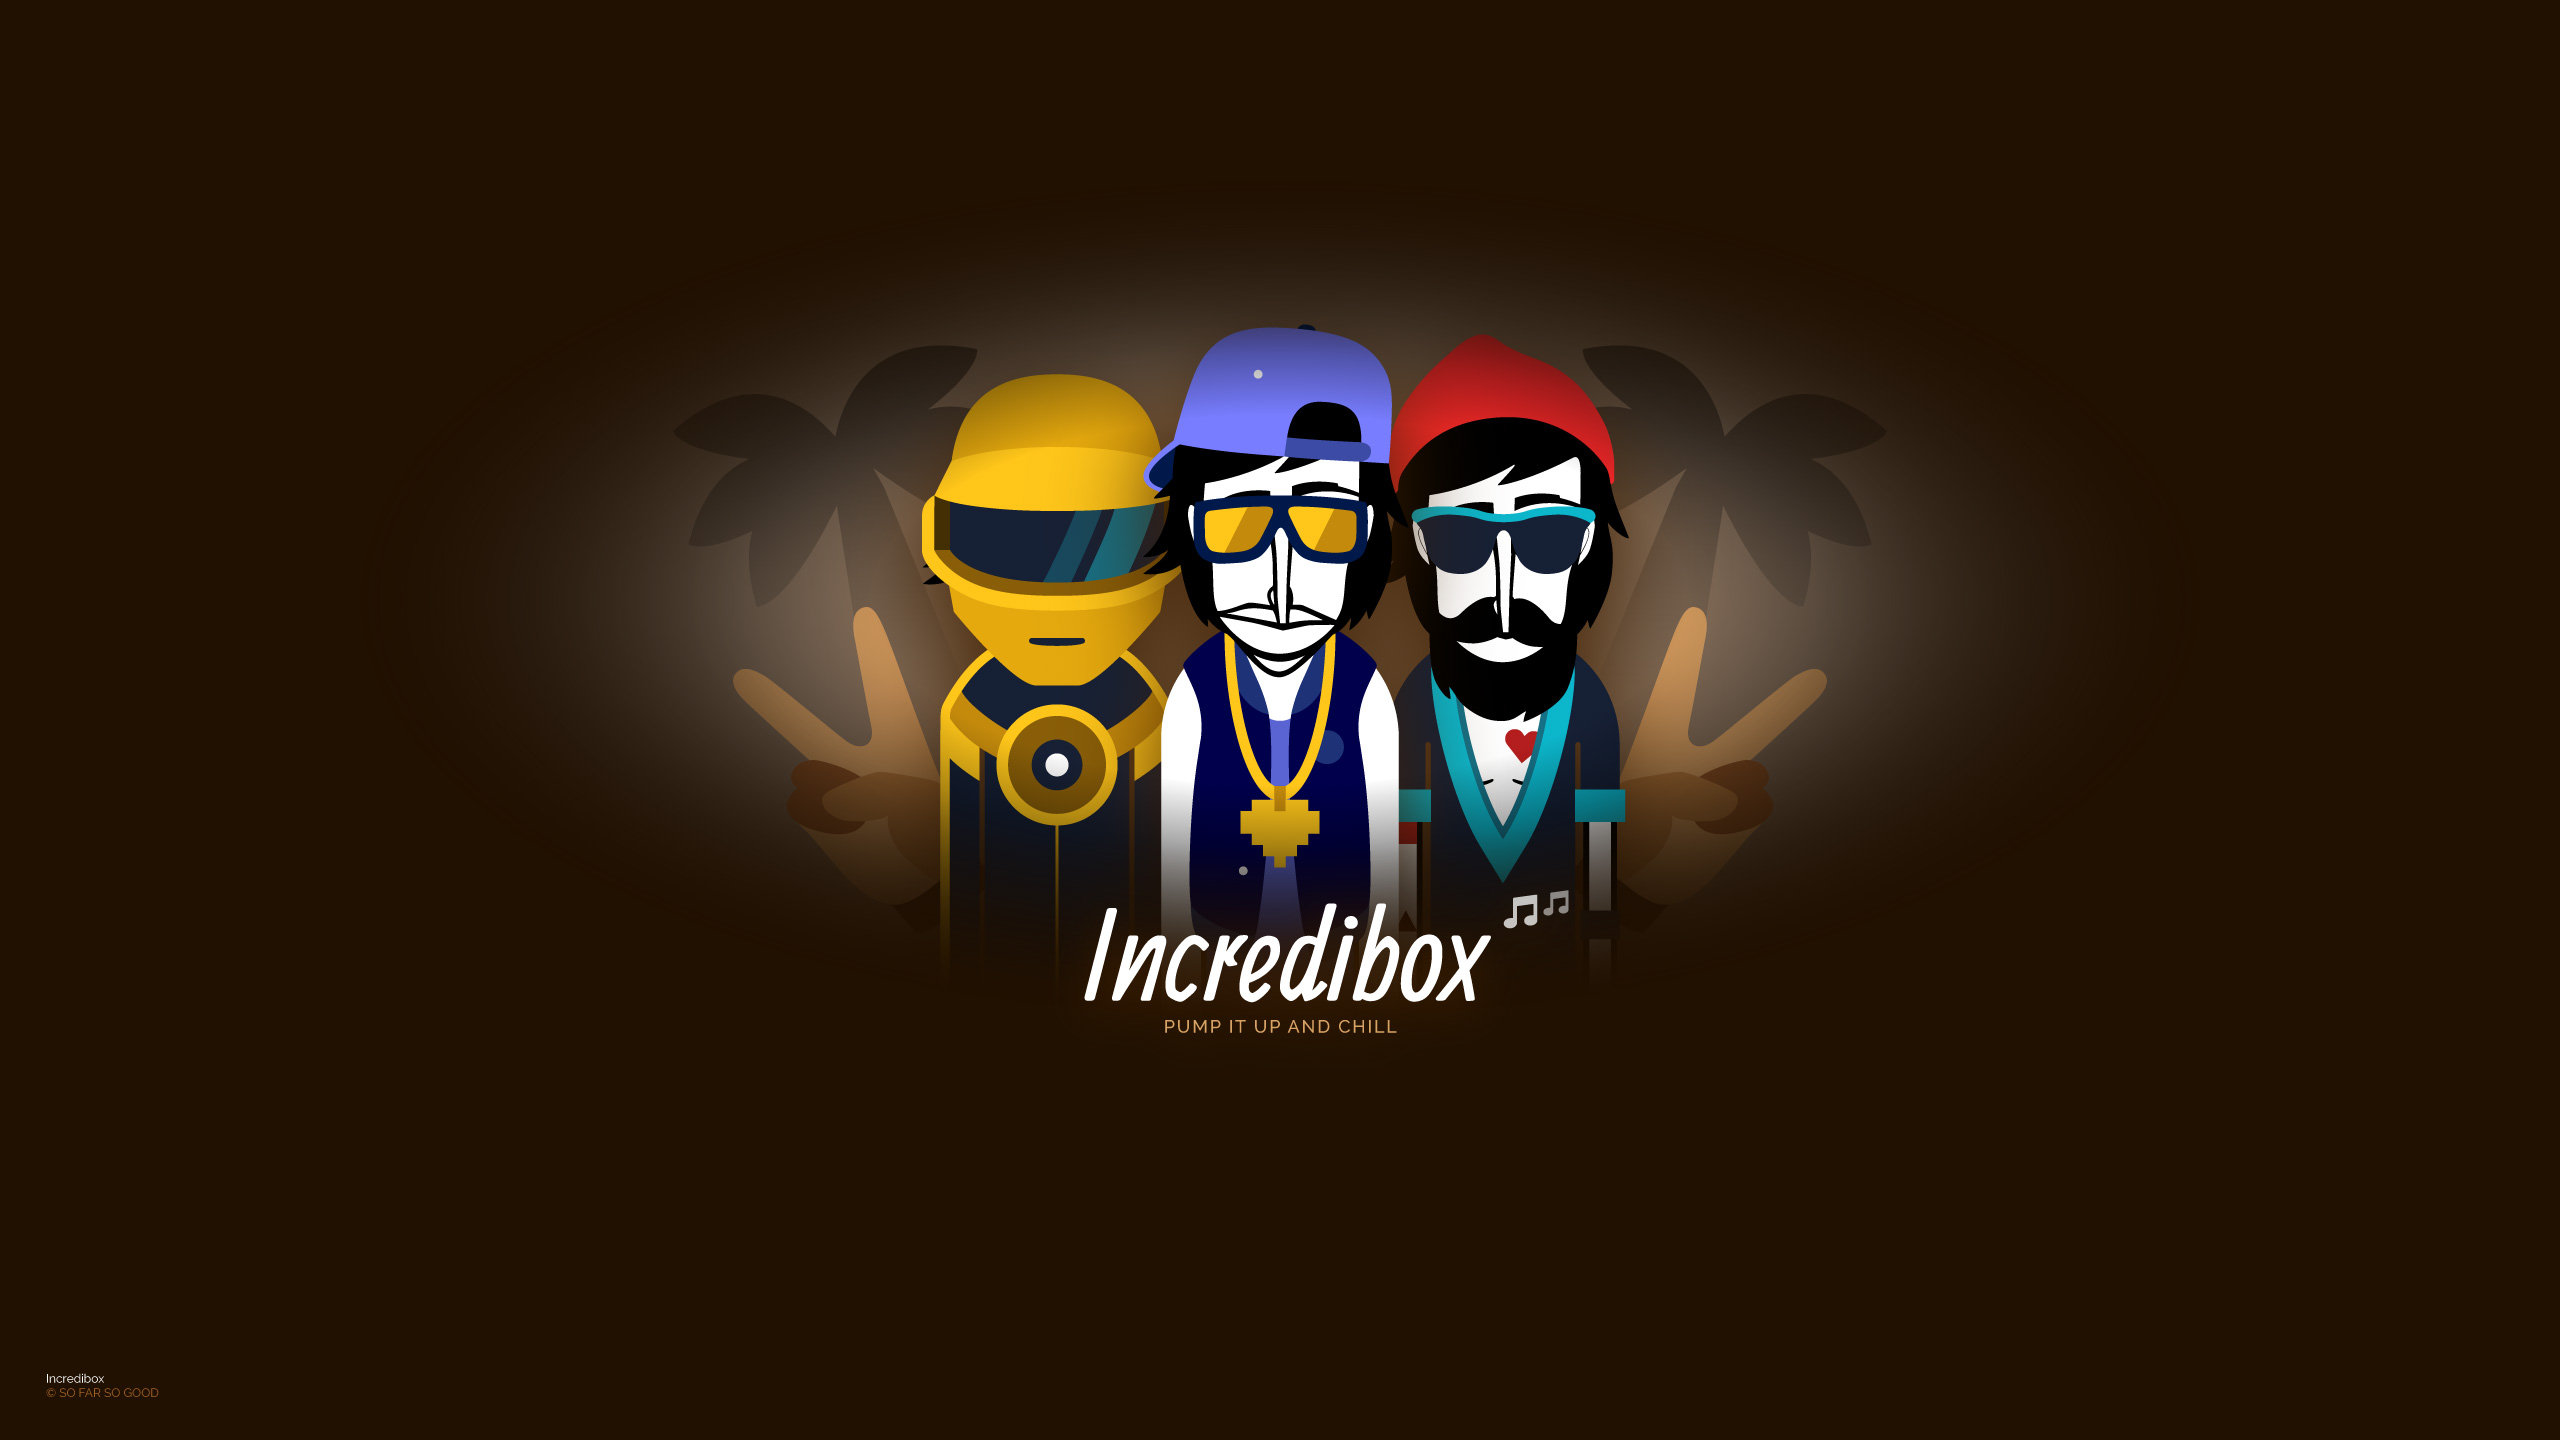 Incredibox Music Gambling Game Posters 2560x1440